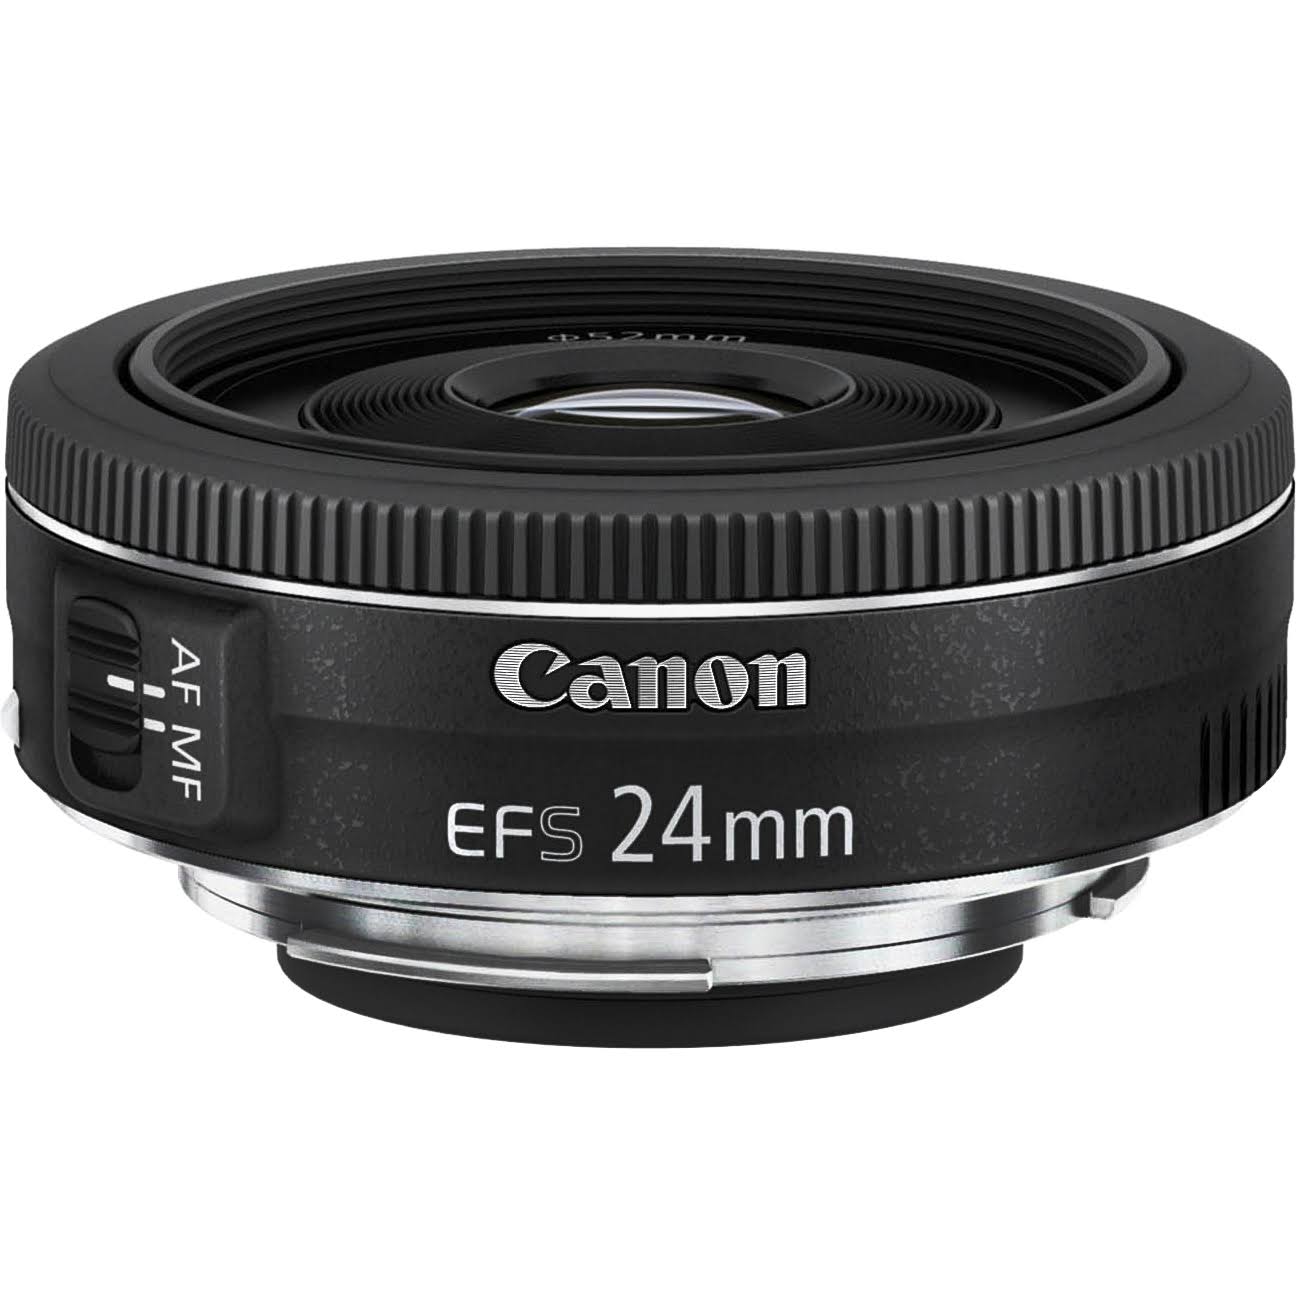 Canon EF-S 10-18mm f / 4.5-5.6 IS STM लेंस है